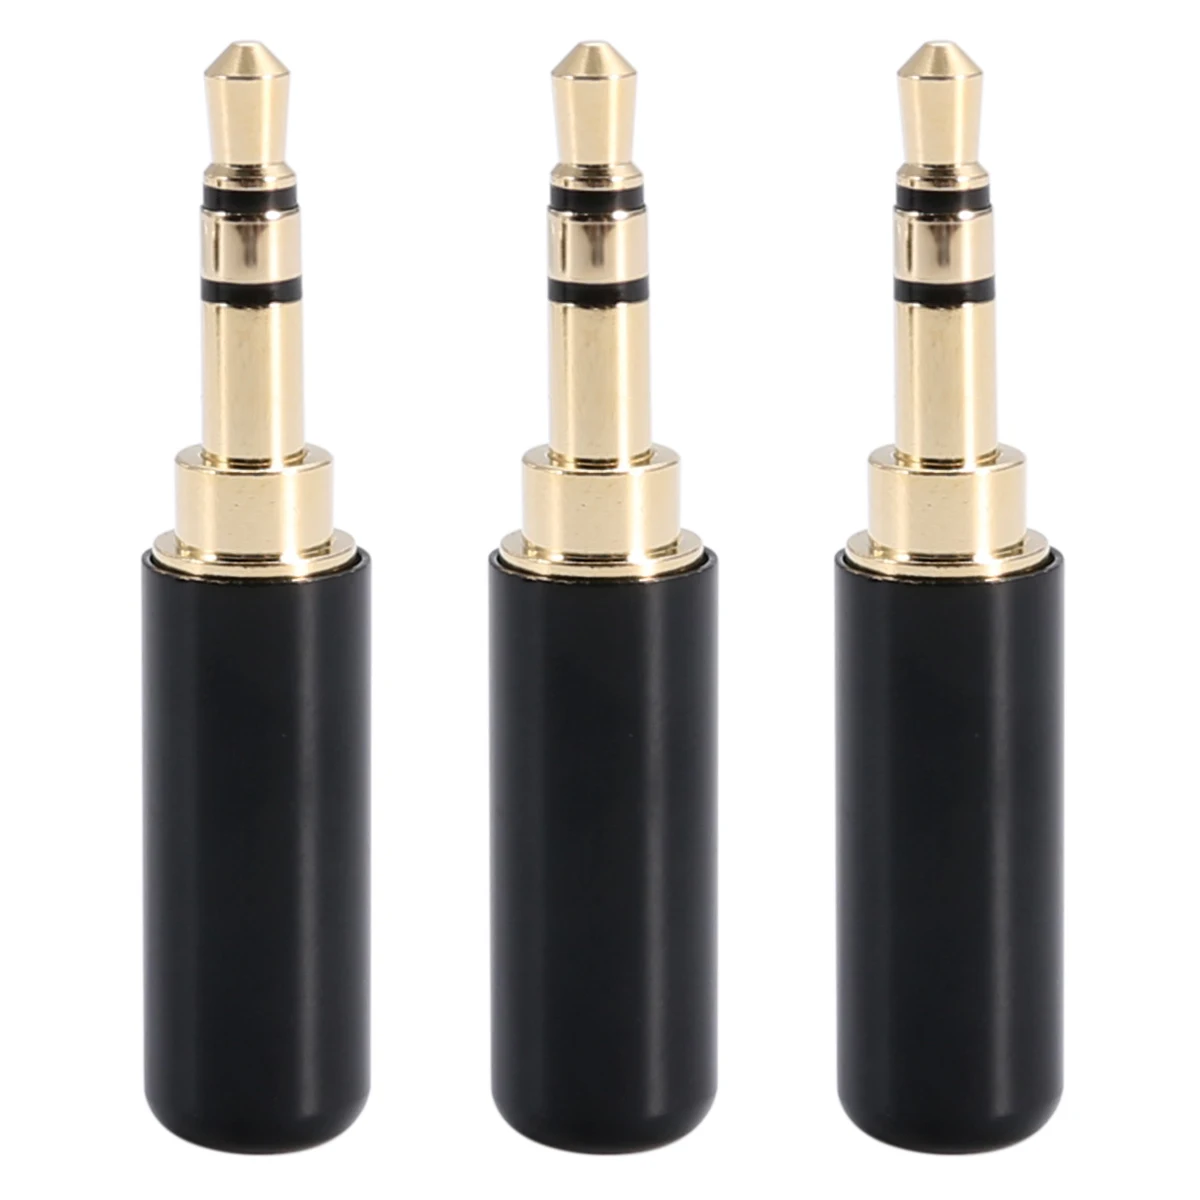 3pcs Copper Gold Plated 3.5mm Male Jack Plug Soldering 3 pole Plug Repair Headphone Cable Solder